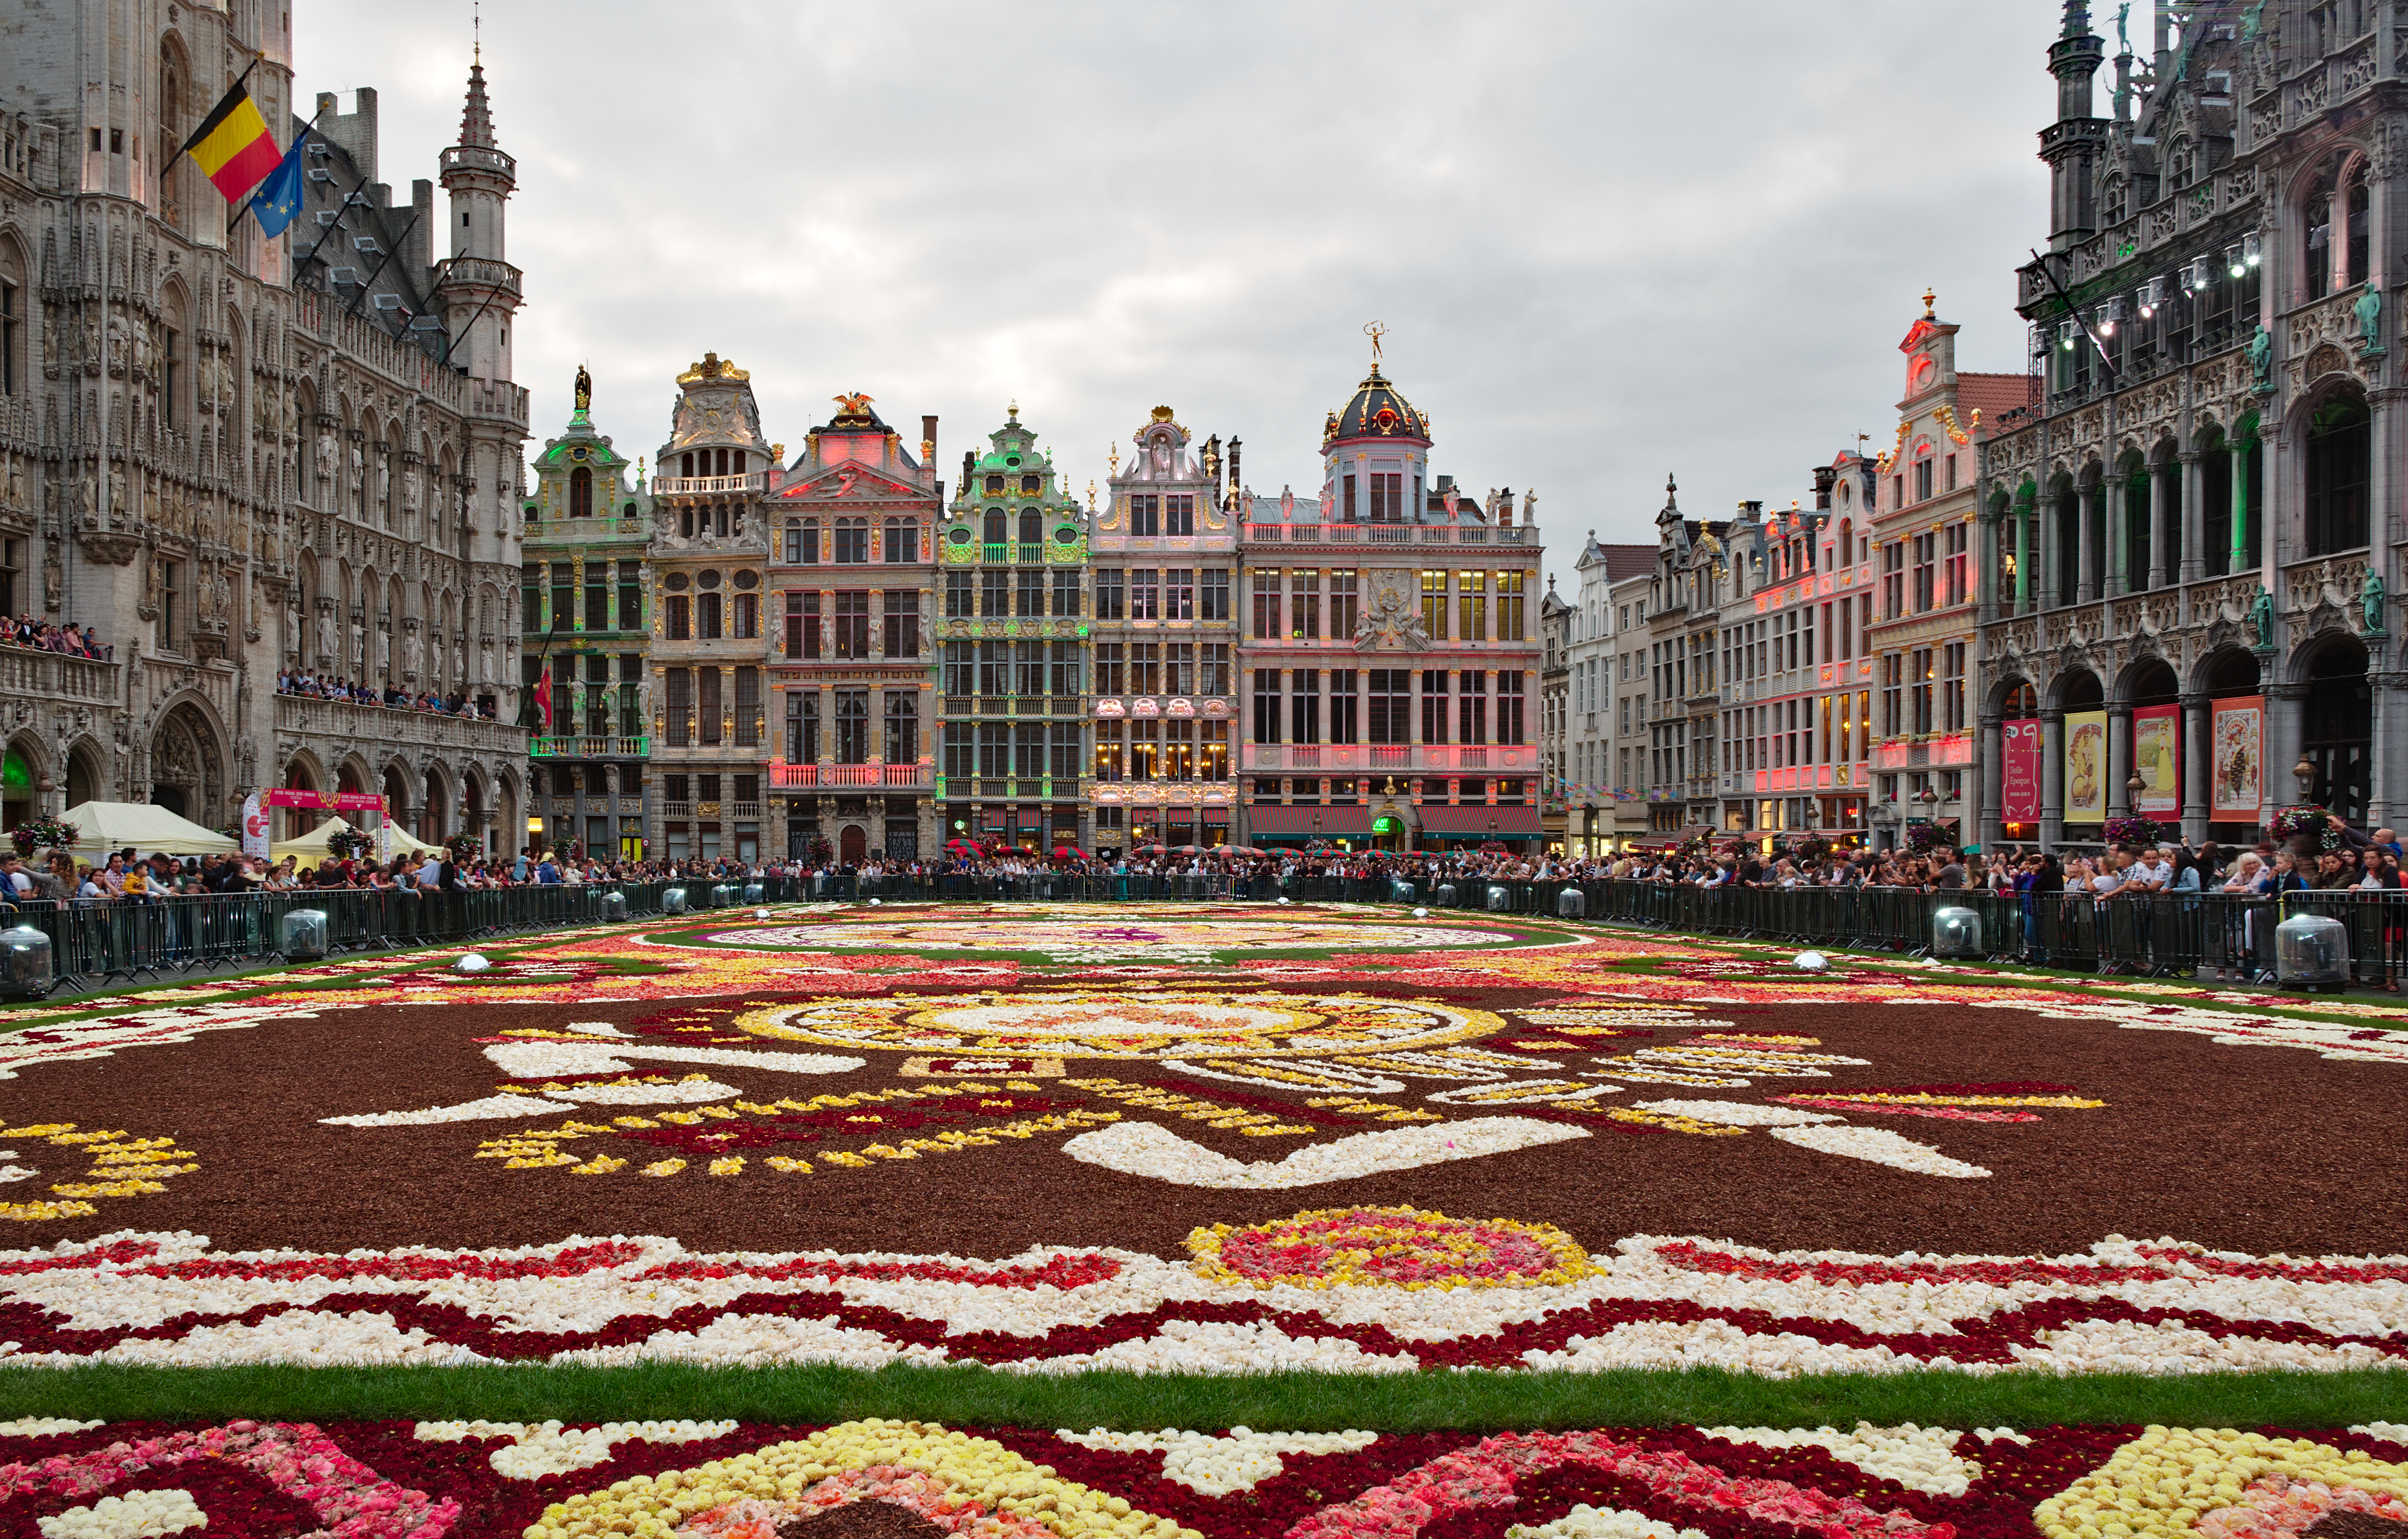 2018 flower carpet at Grand Place, Brussels (DSCF6849)